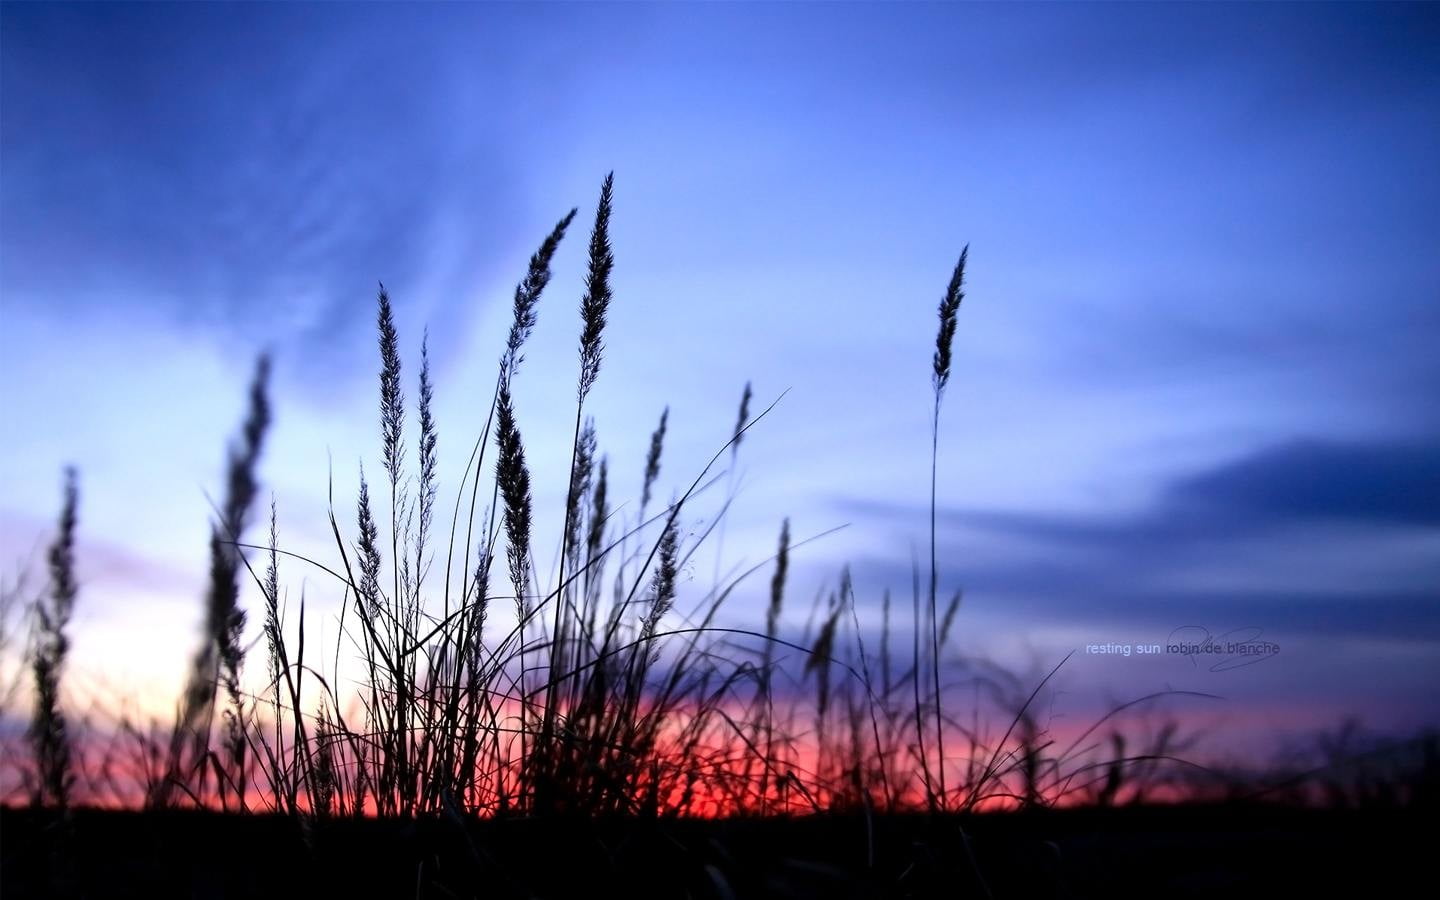 wheat field, shadow, nature